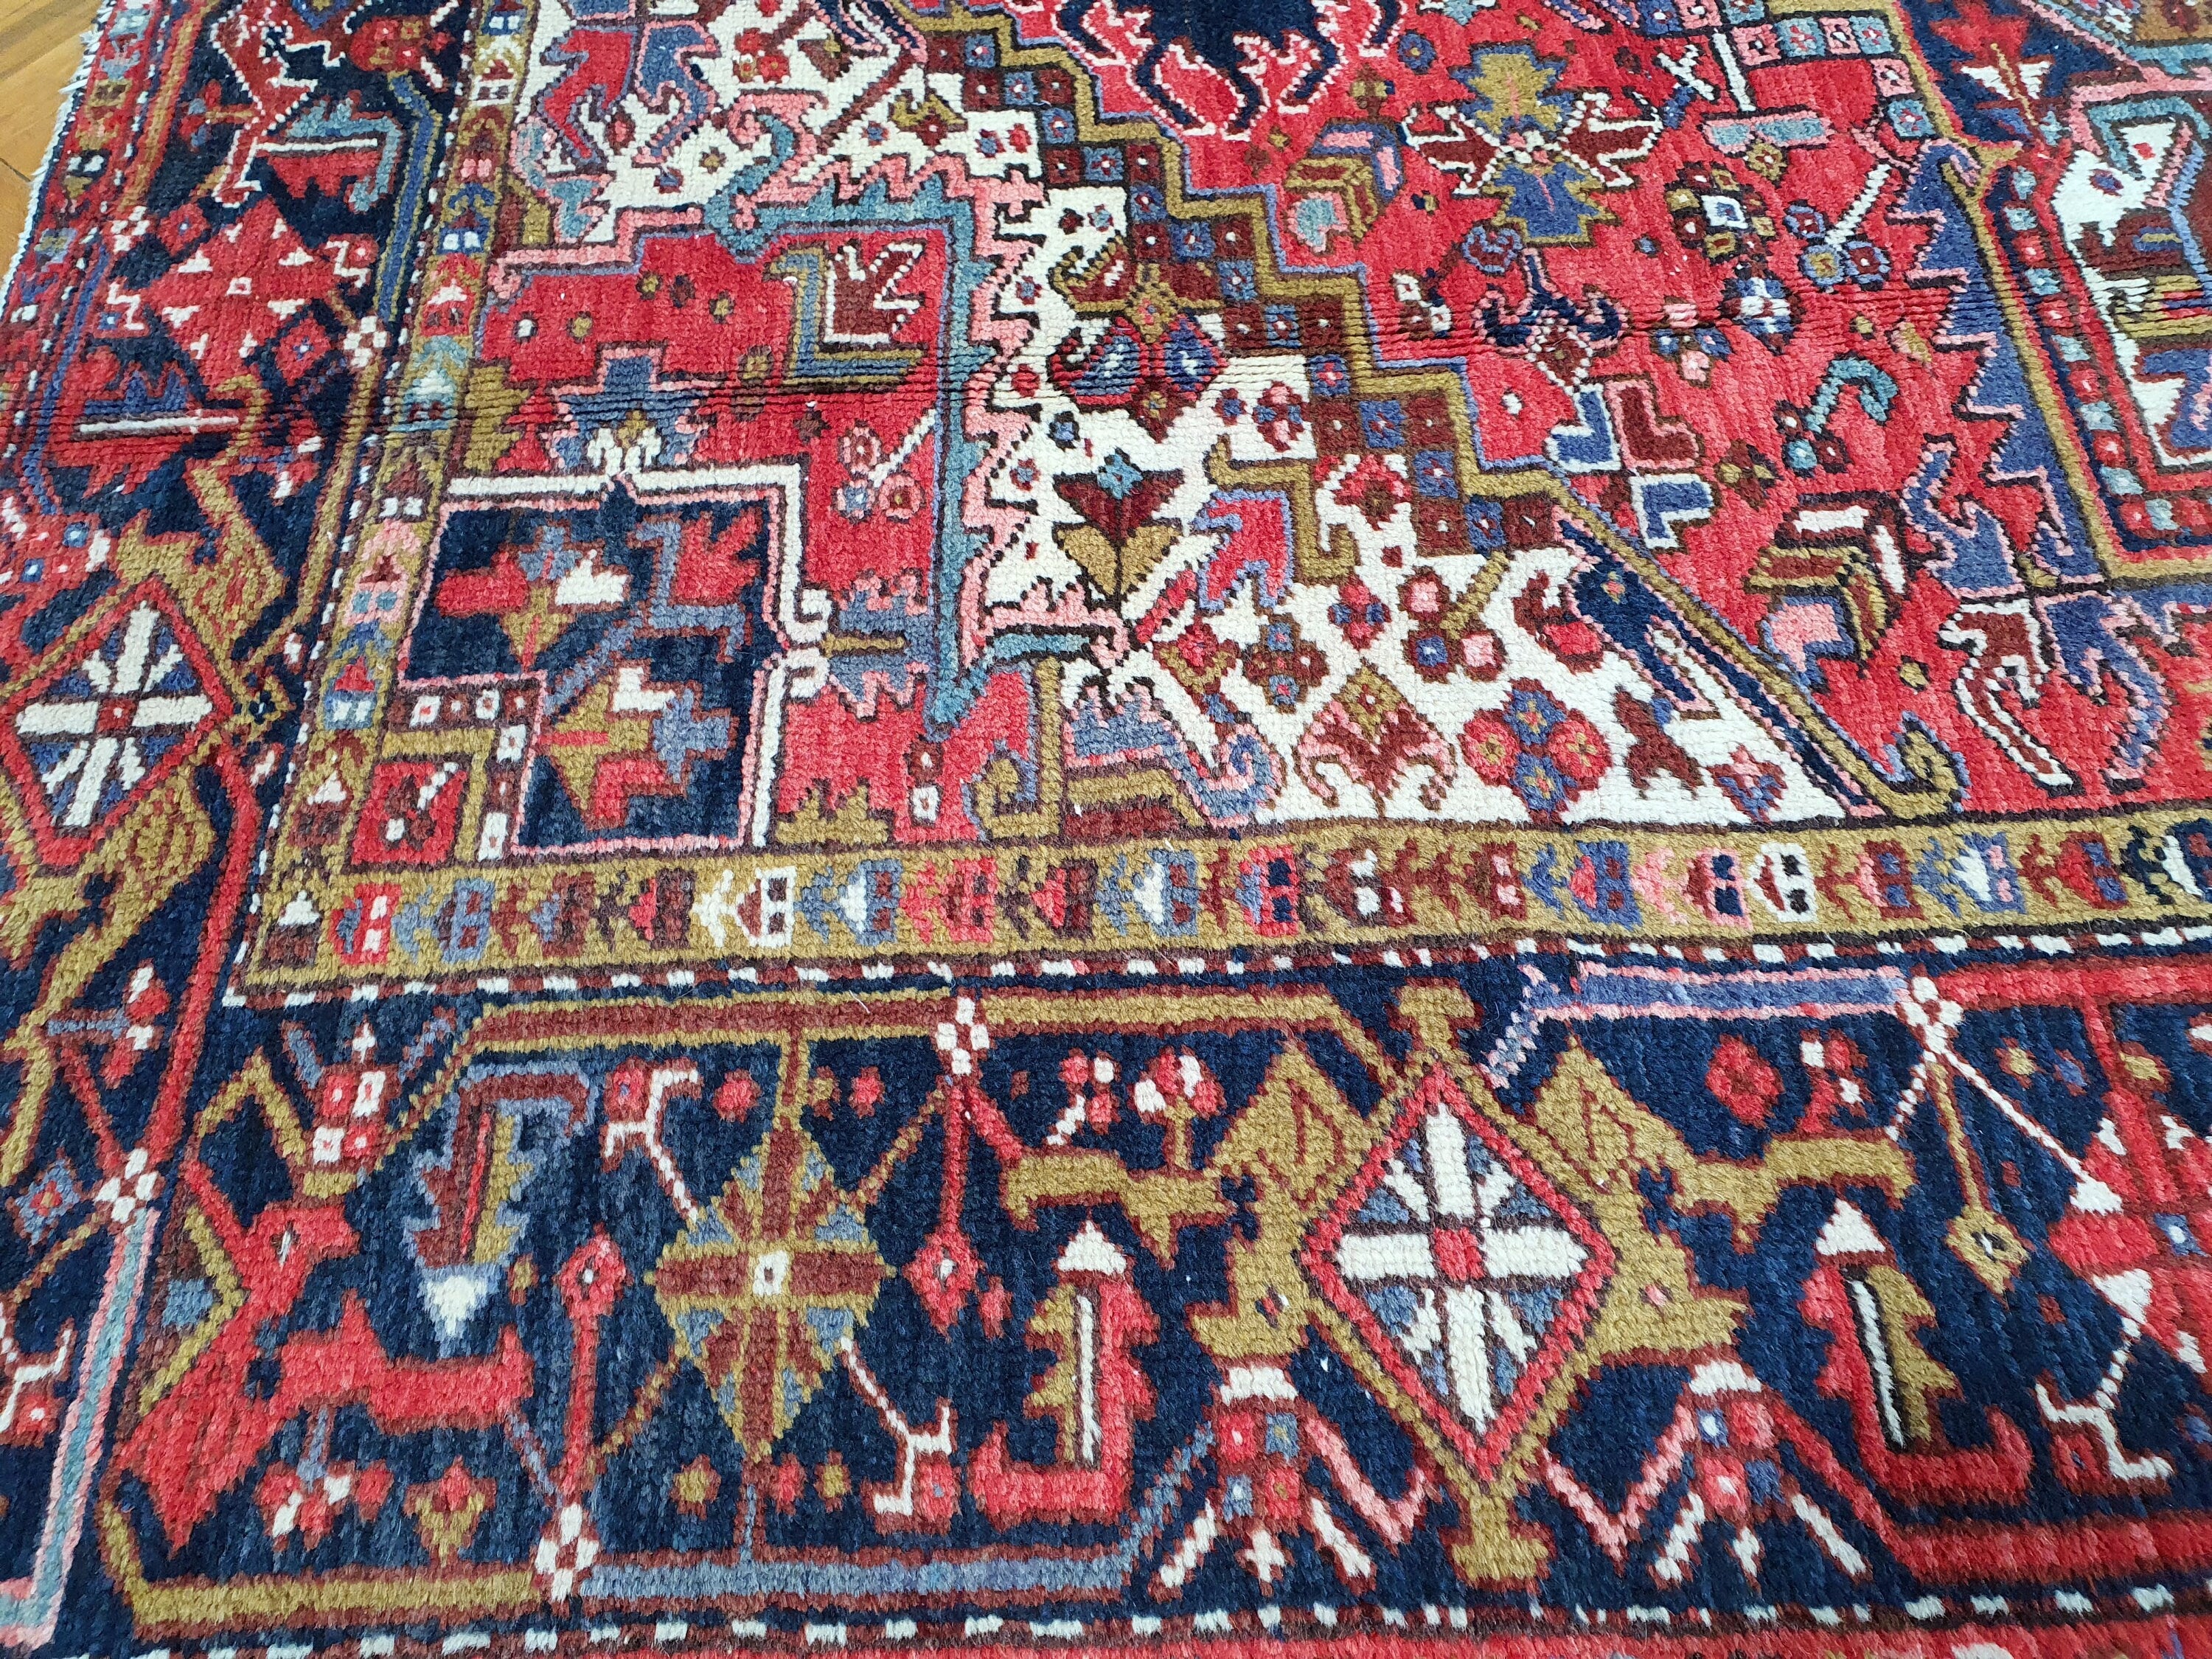 Red and Blue Persian Area Rug, 9'6'' x 6'9'' ft Vintage Turkish Tribal Organic Wool Rug, Recycled Oriental Design Rustic Floor Rug, Rug